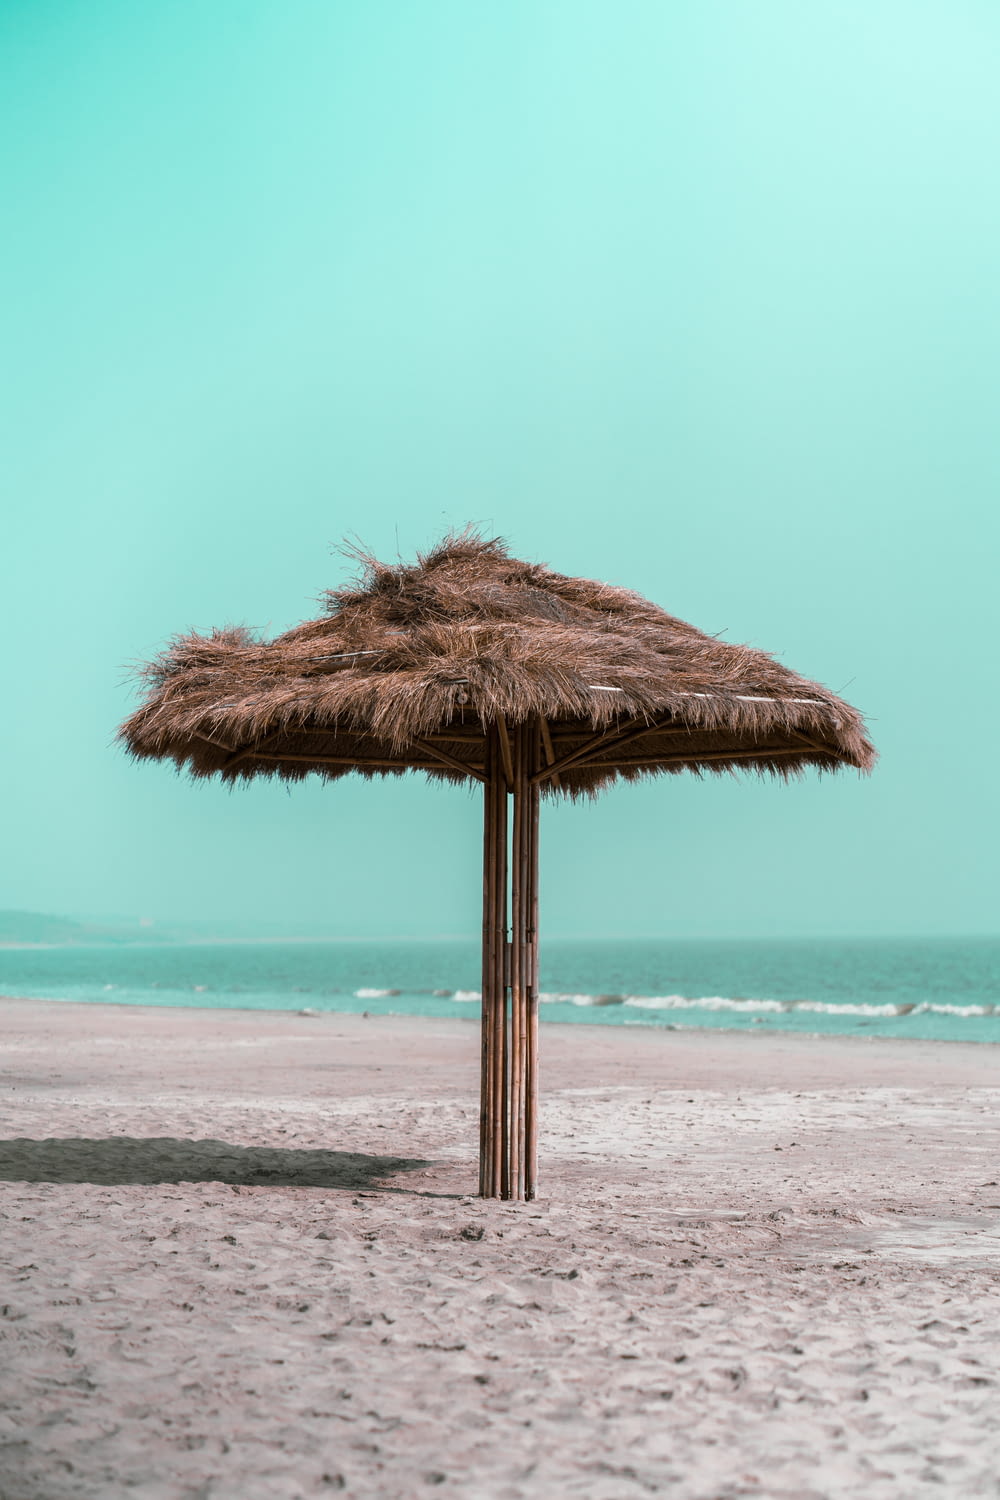 a straw umbrella on a sandy beach near the ocean